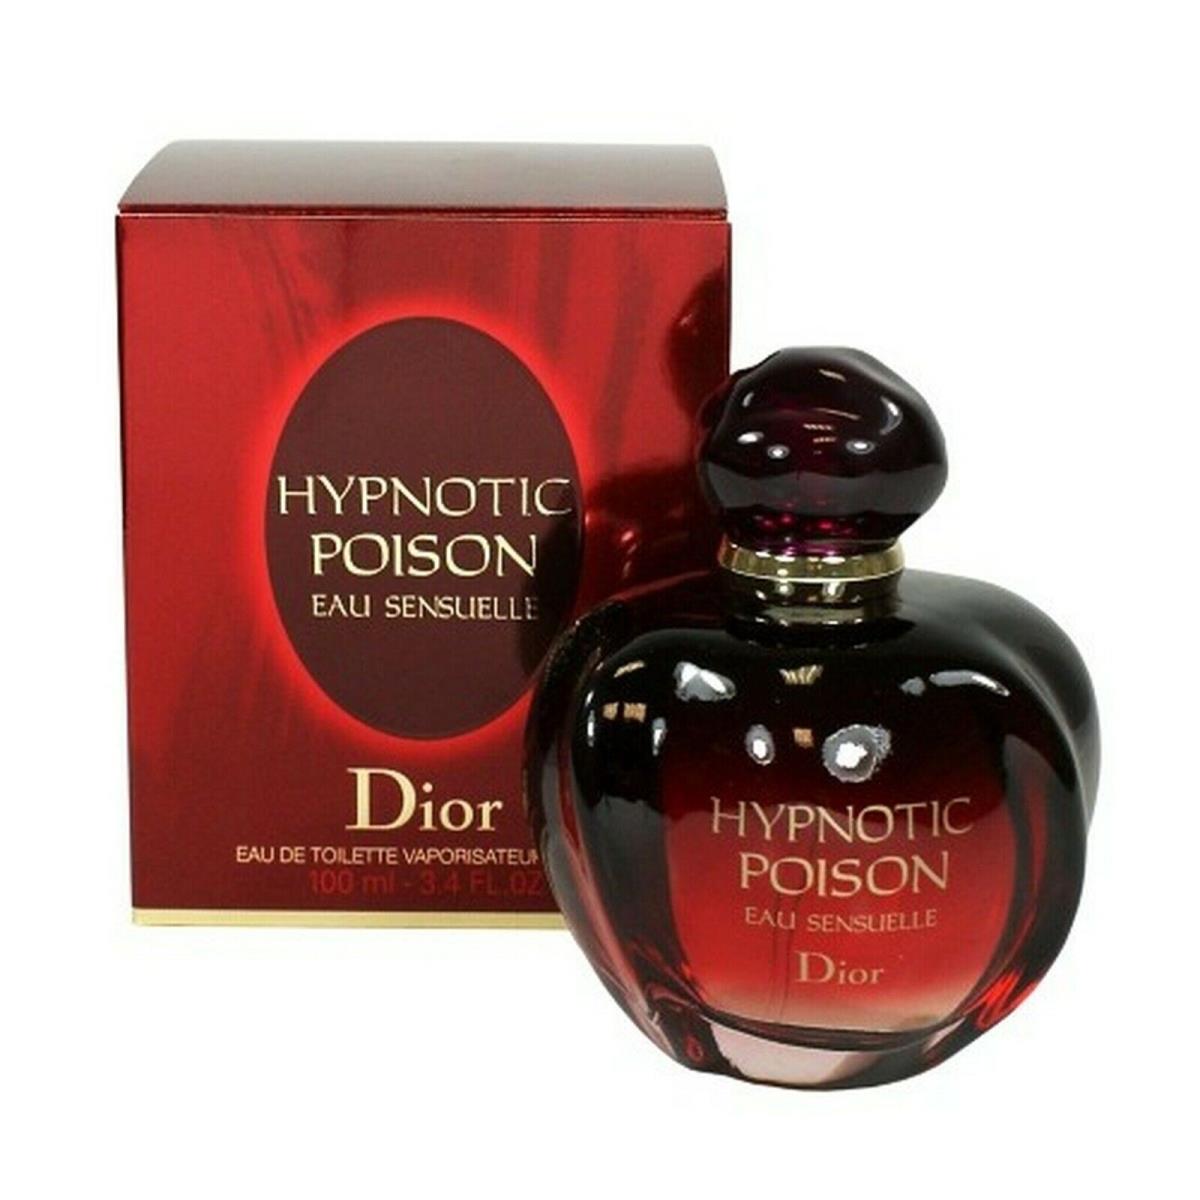 Hypnotic Poison Eau Sensuelle by Christian Dior 3.4 Fl oz Edt Spray For Women